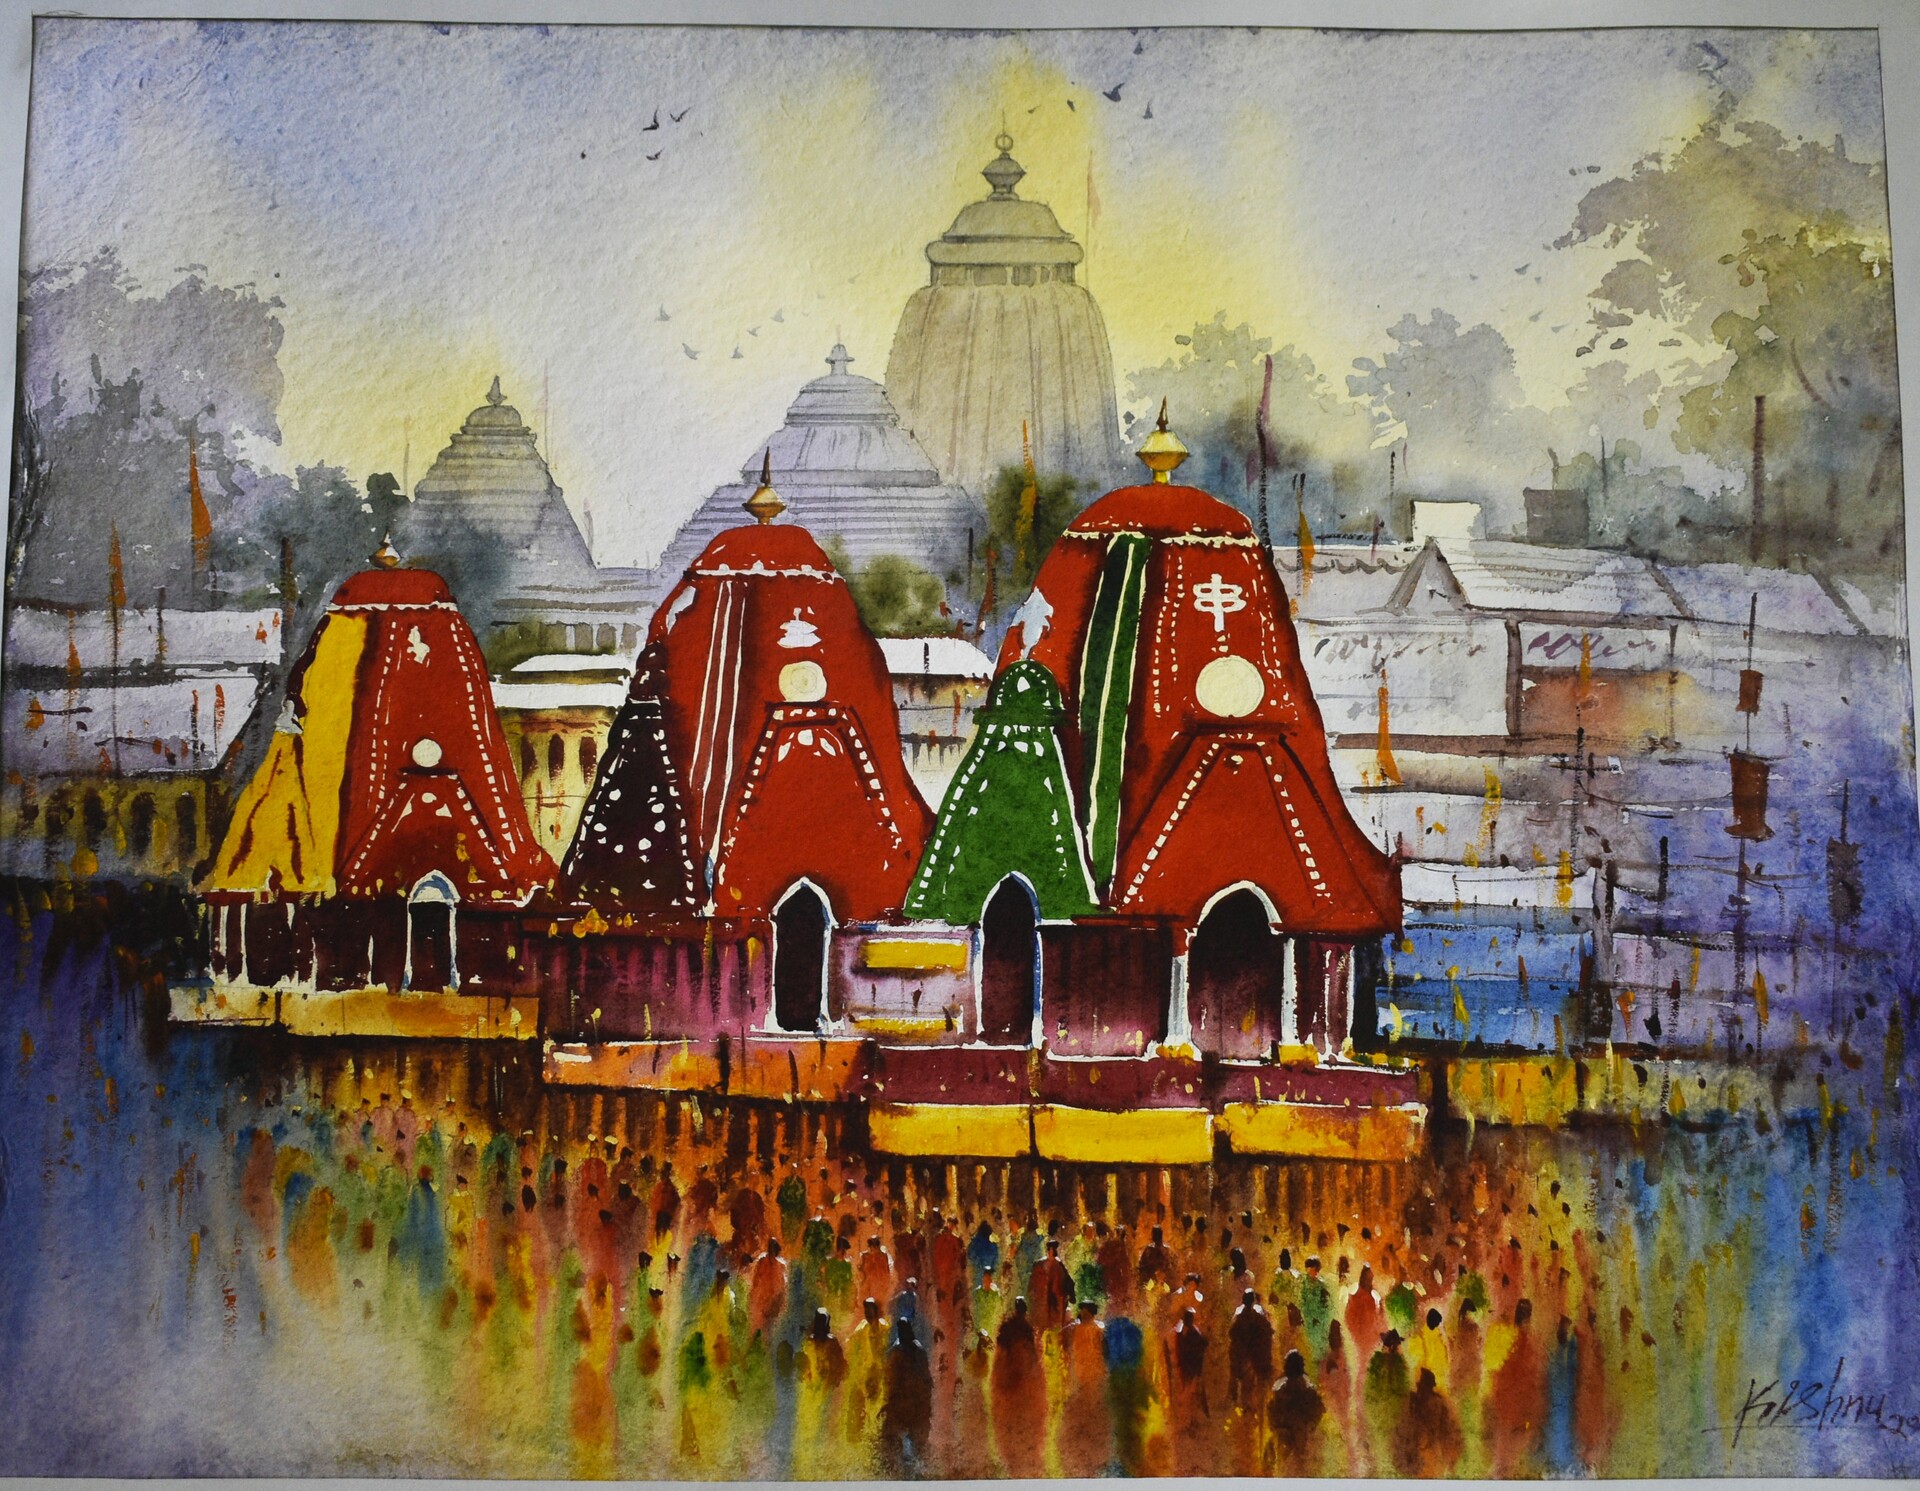 Vector Illustration of Ratha Yatra of Lord Jagannath is also known as  Bahuda Jatra, innovative Vector design of Ratha Yatra of Lord Jagannath,  Balabha Stock Vector Image & Art - Alamy